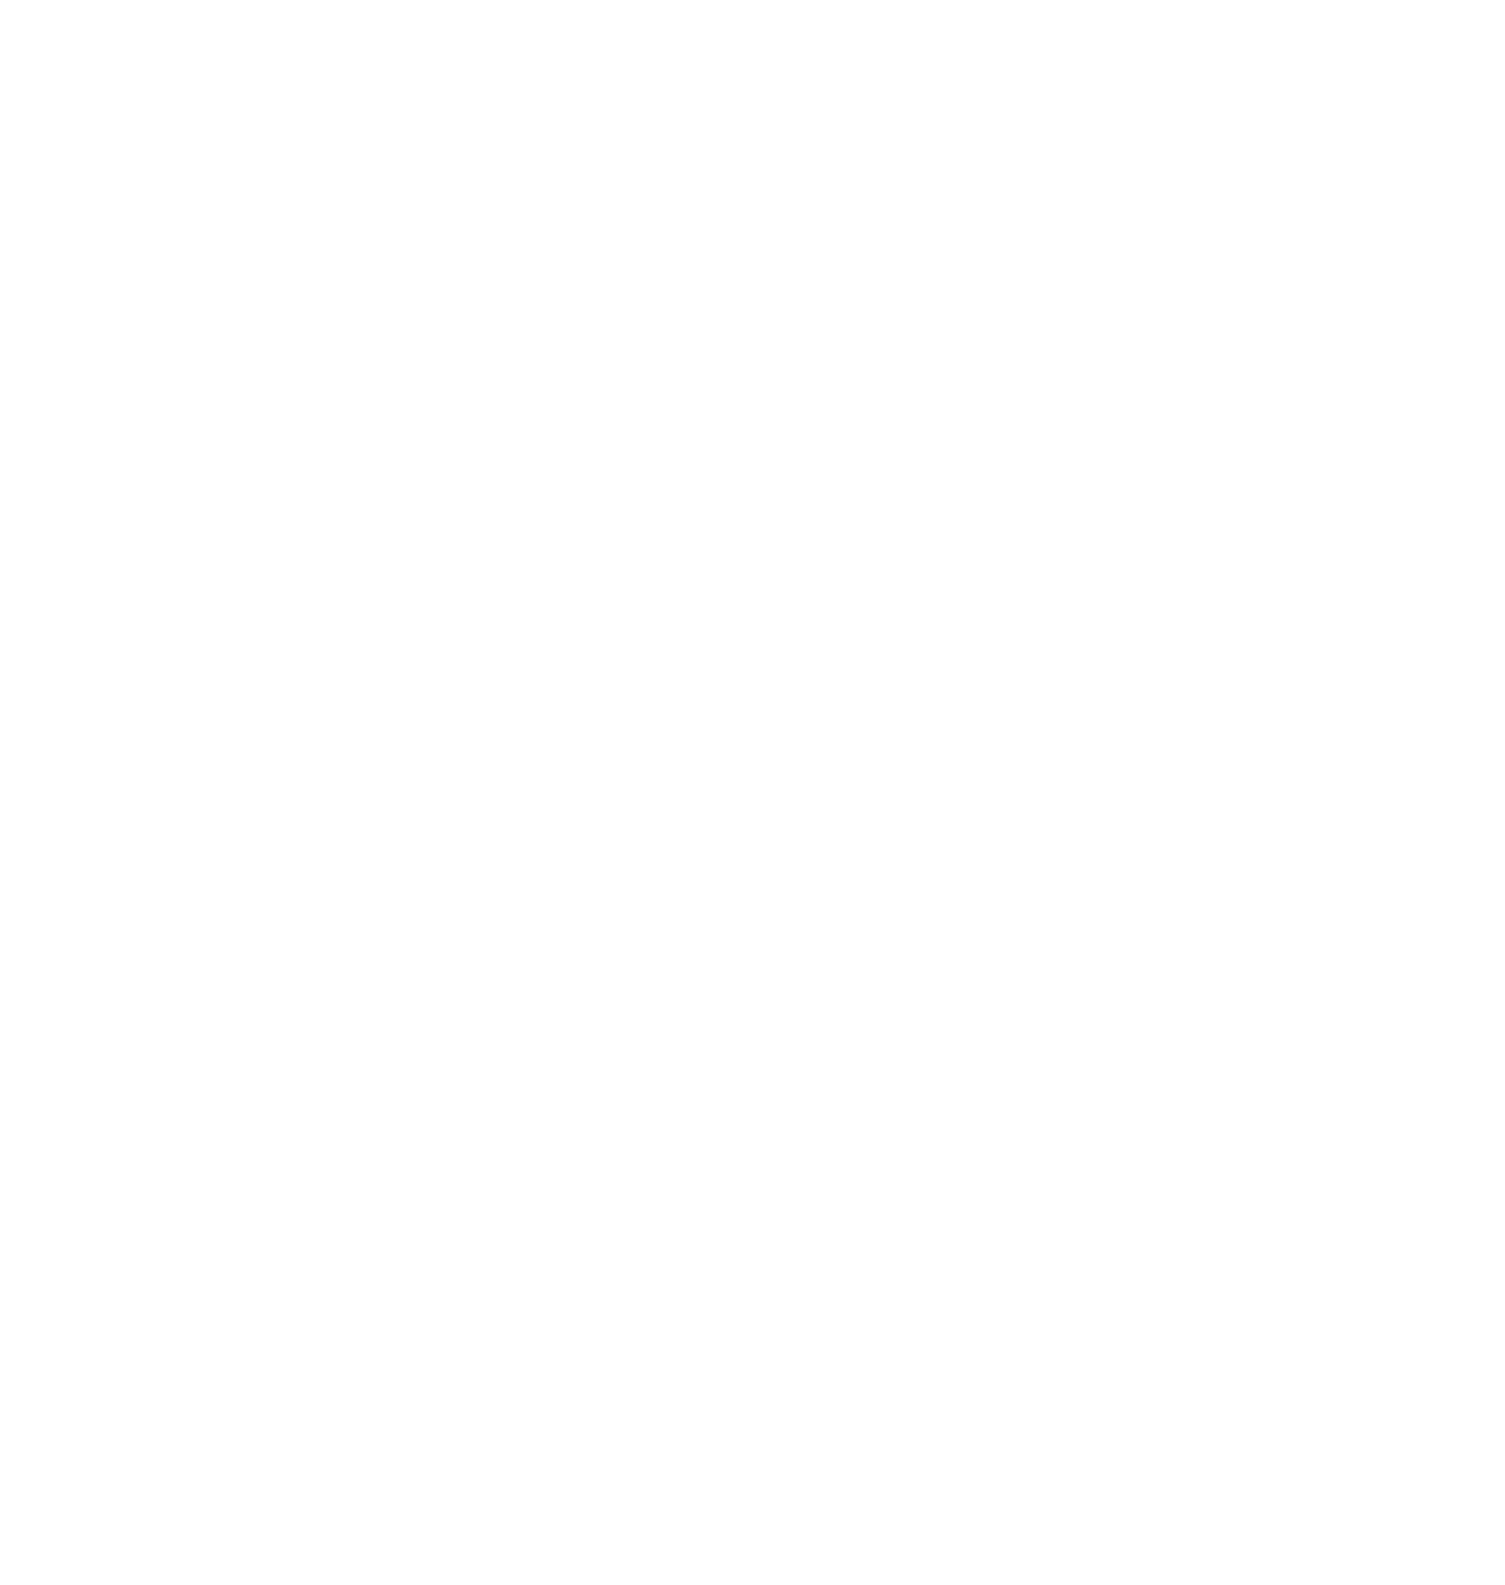 Cimbeton logo for dark backgrounds (transparent PNG)